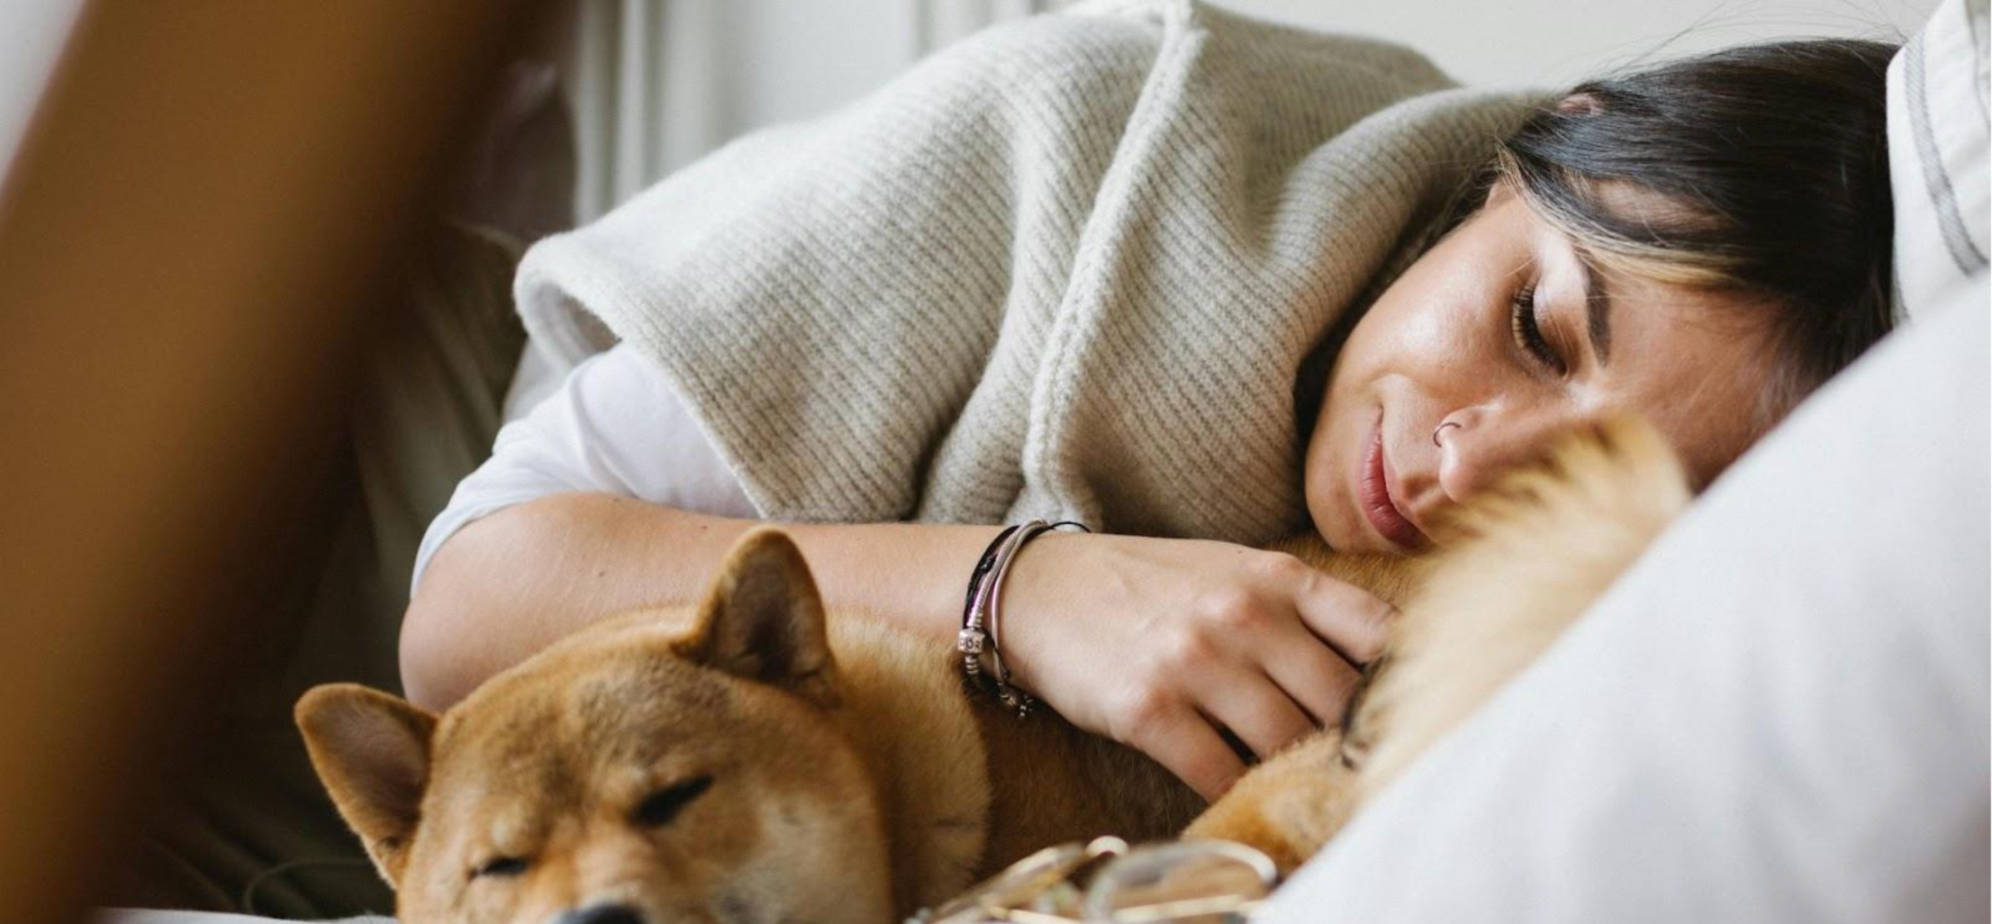 Woman sleeping and dog sleeping next to her